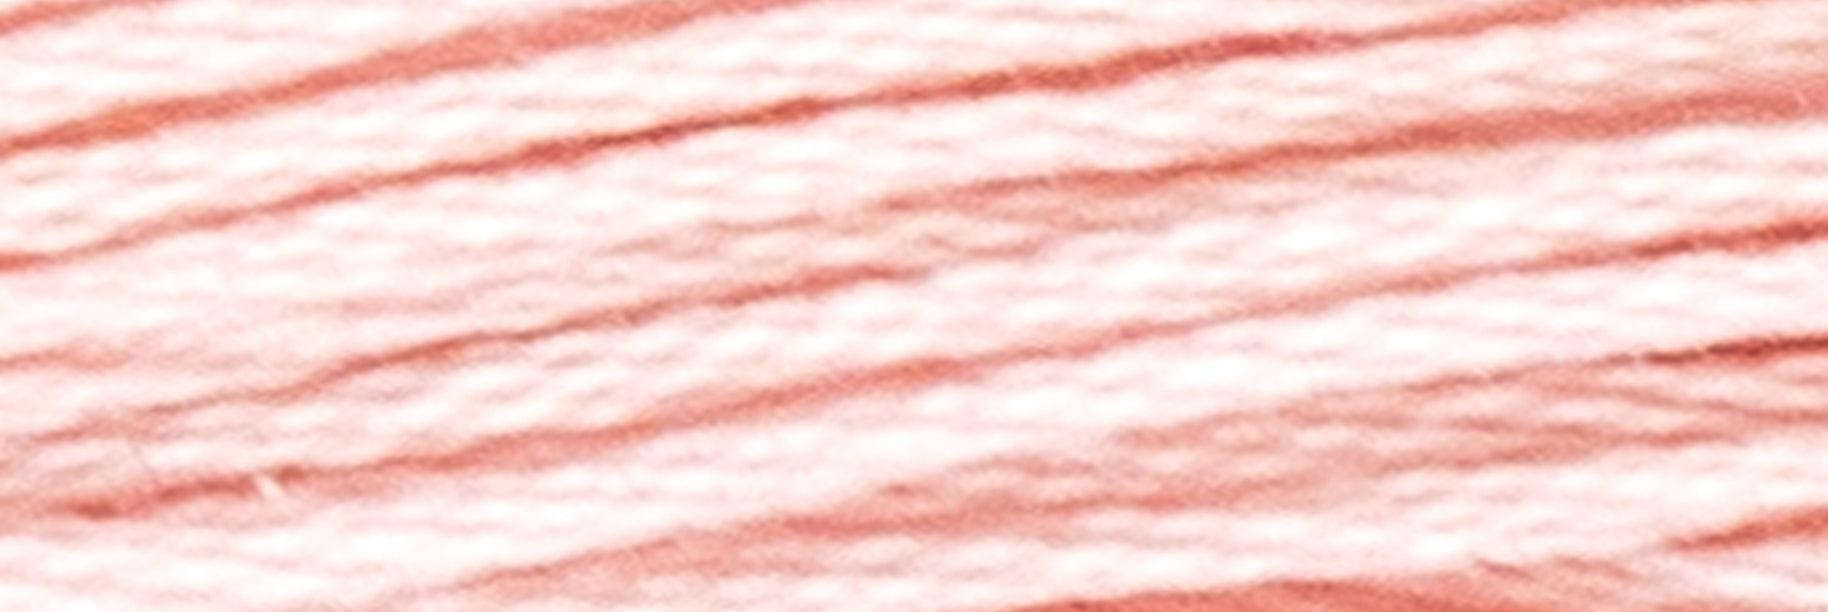 Stranded Cotton Luca-S - 23 / DMC 818 / Anchor 24 - Luca-S Stranded Cotton